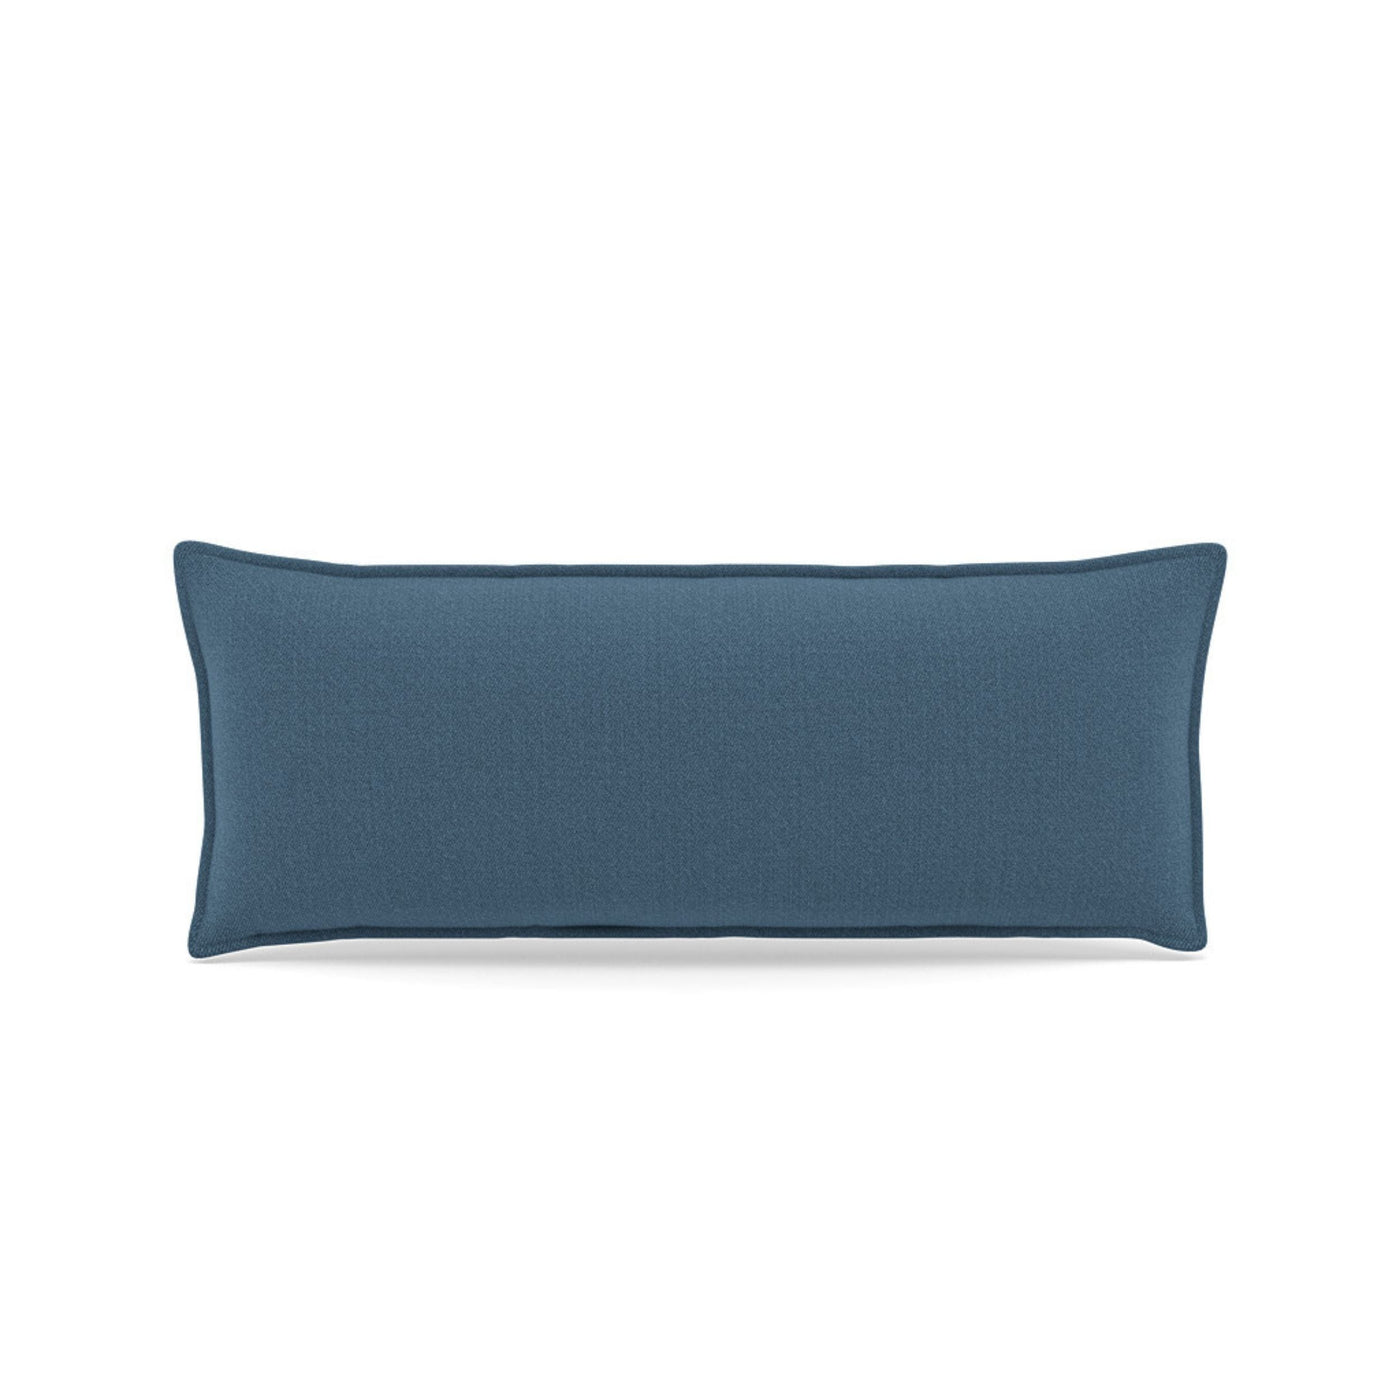 Muutos In Situ Cushion for the In Situ Modular Sofa series in vidar 733, 70x30cm. Made to order from someday designs. #colour_vidar-733